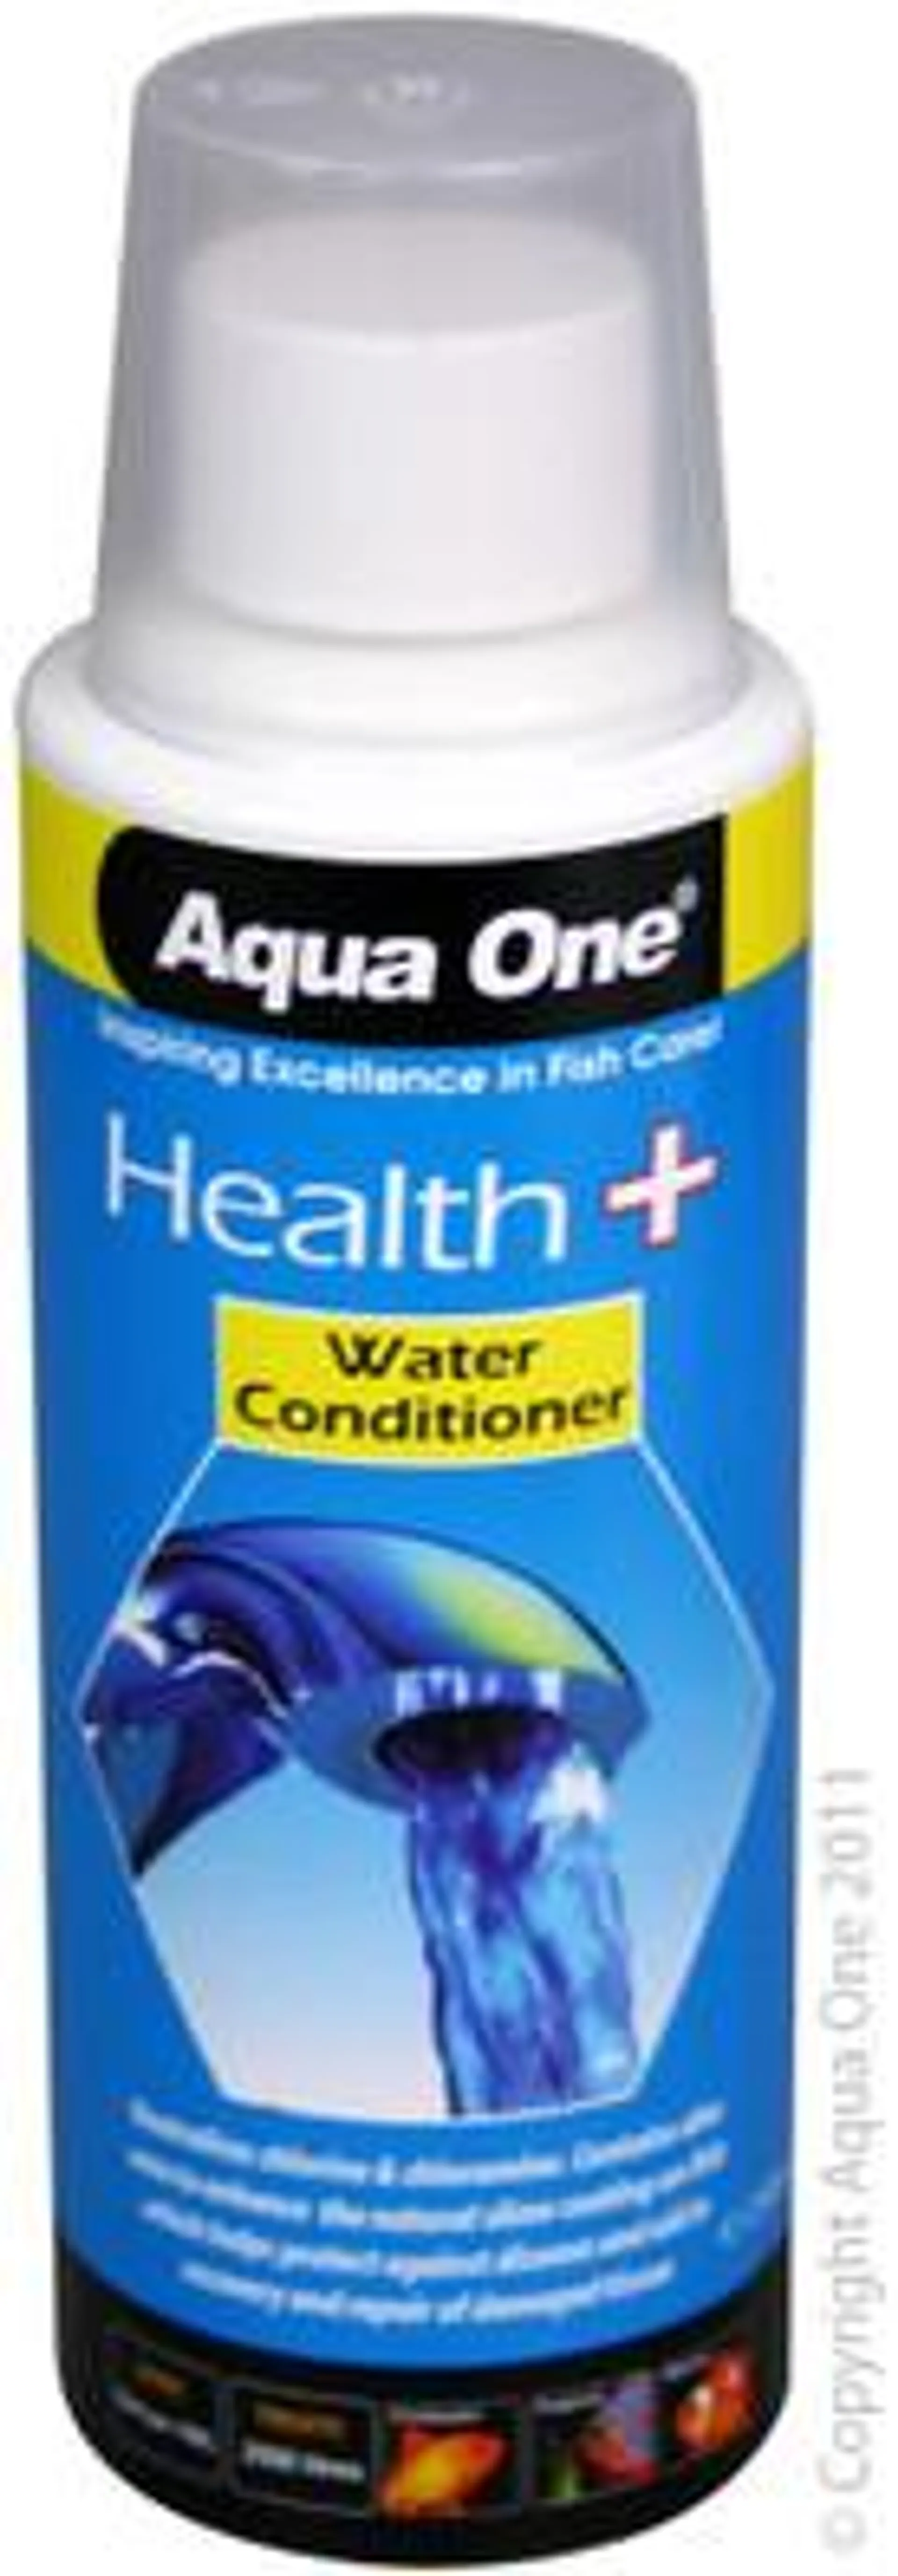 Aqua One Water Conditioner Health Treatment